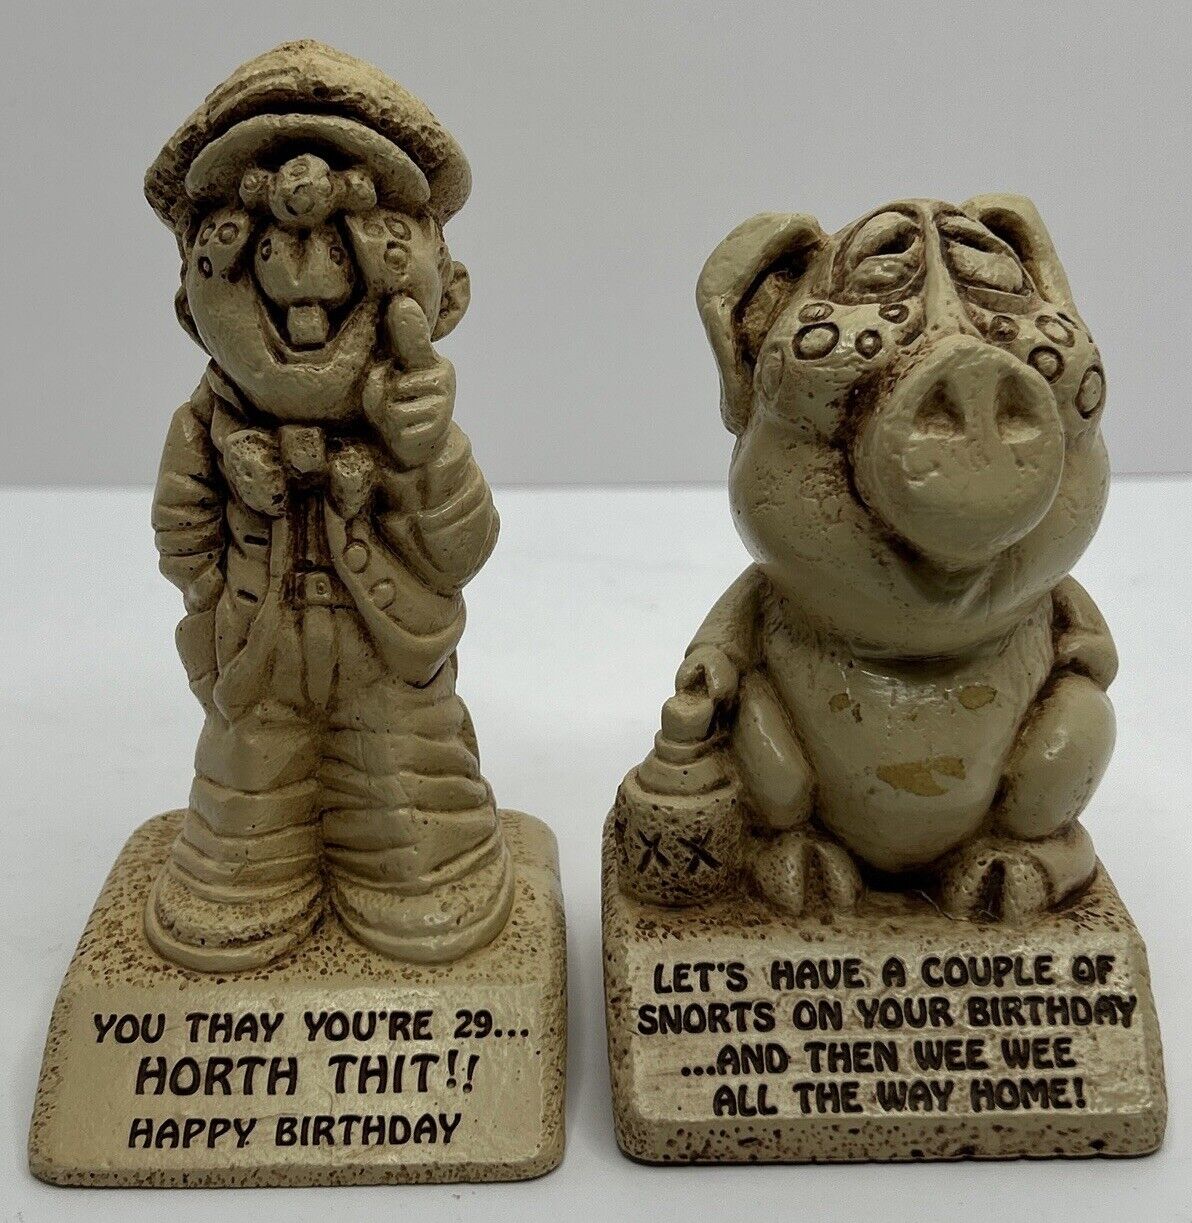 Vintage Lot of 2 Paula Resin Figurines Birthday Statues Pig Horth Thit  1970s